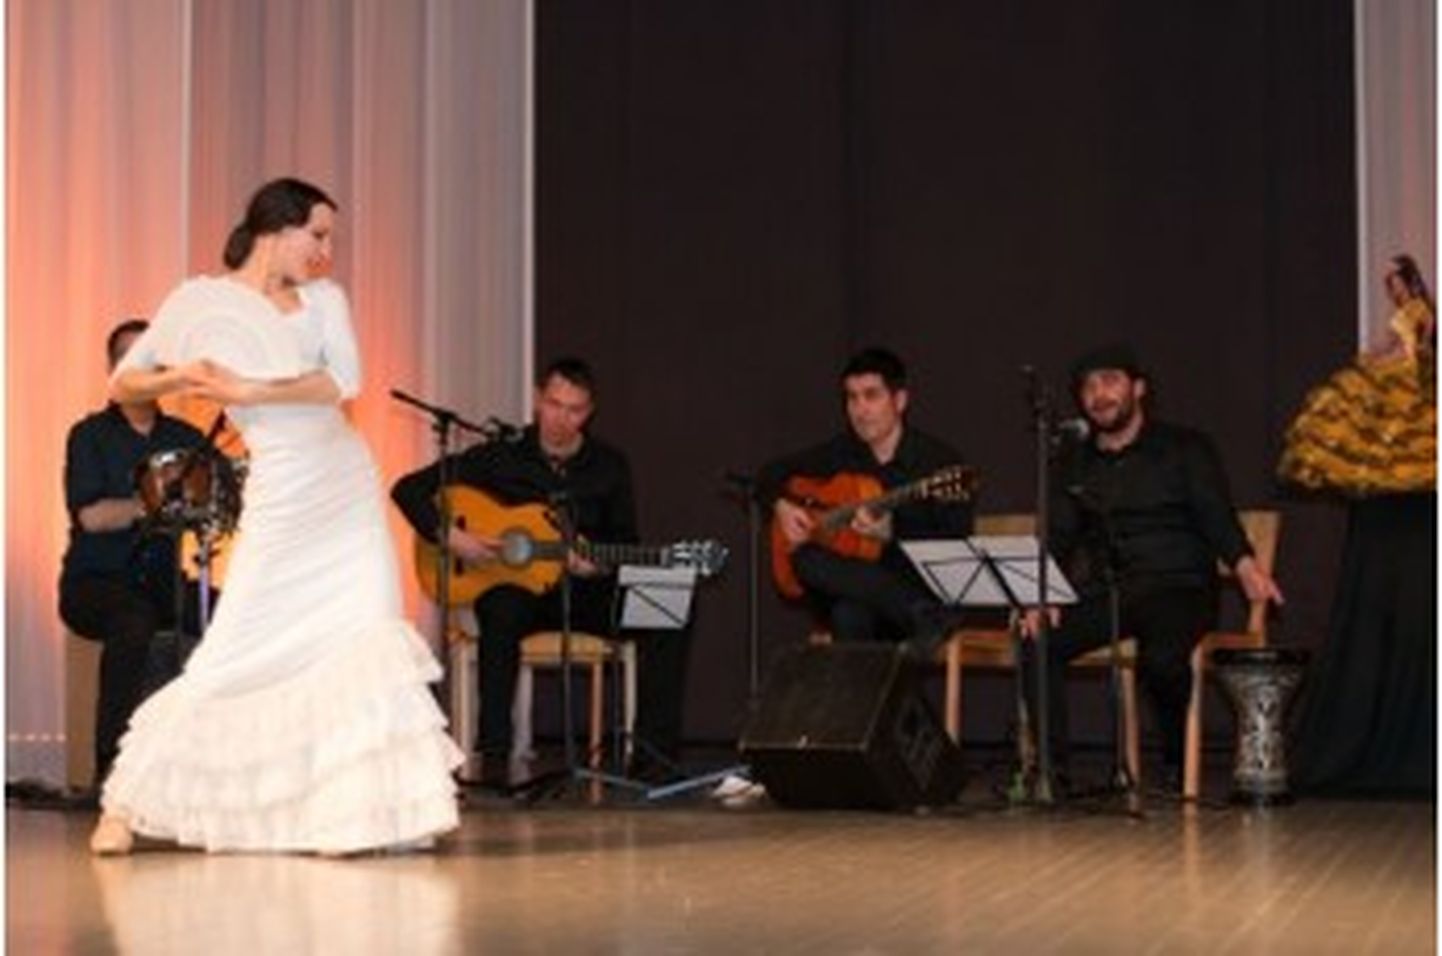 Flamenkokvintett Castaño kontserdil on flamenkotantsu ja -laulu ning kitarri- ja kahonimängu hispaanlasest, venelasest, ungarlasest, kuubalasest ja eestlasest noore artisti tunnetamise ja tõlgendamise kaudu.